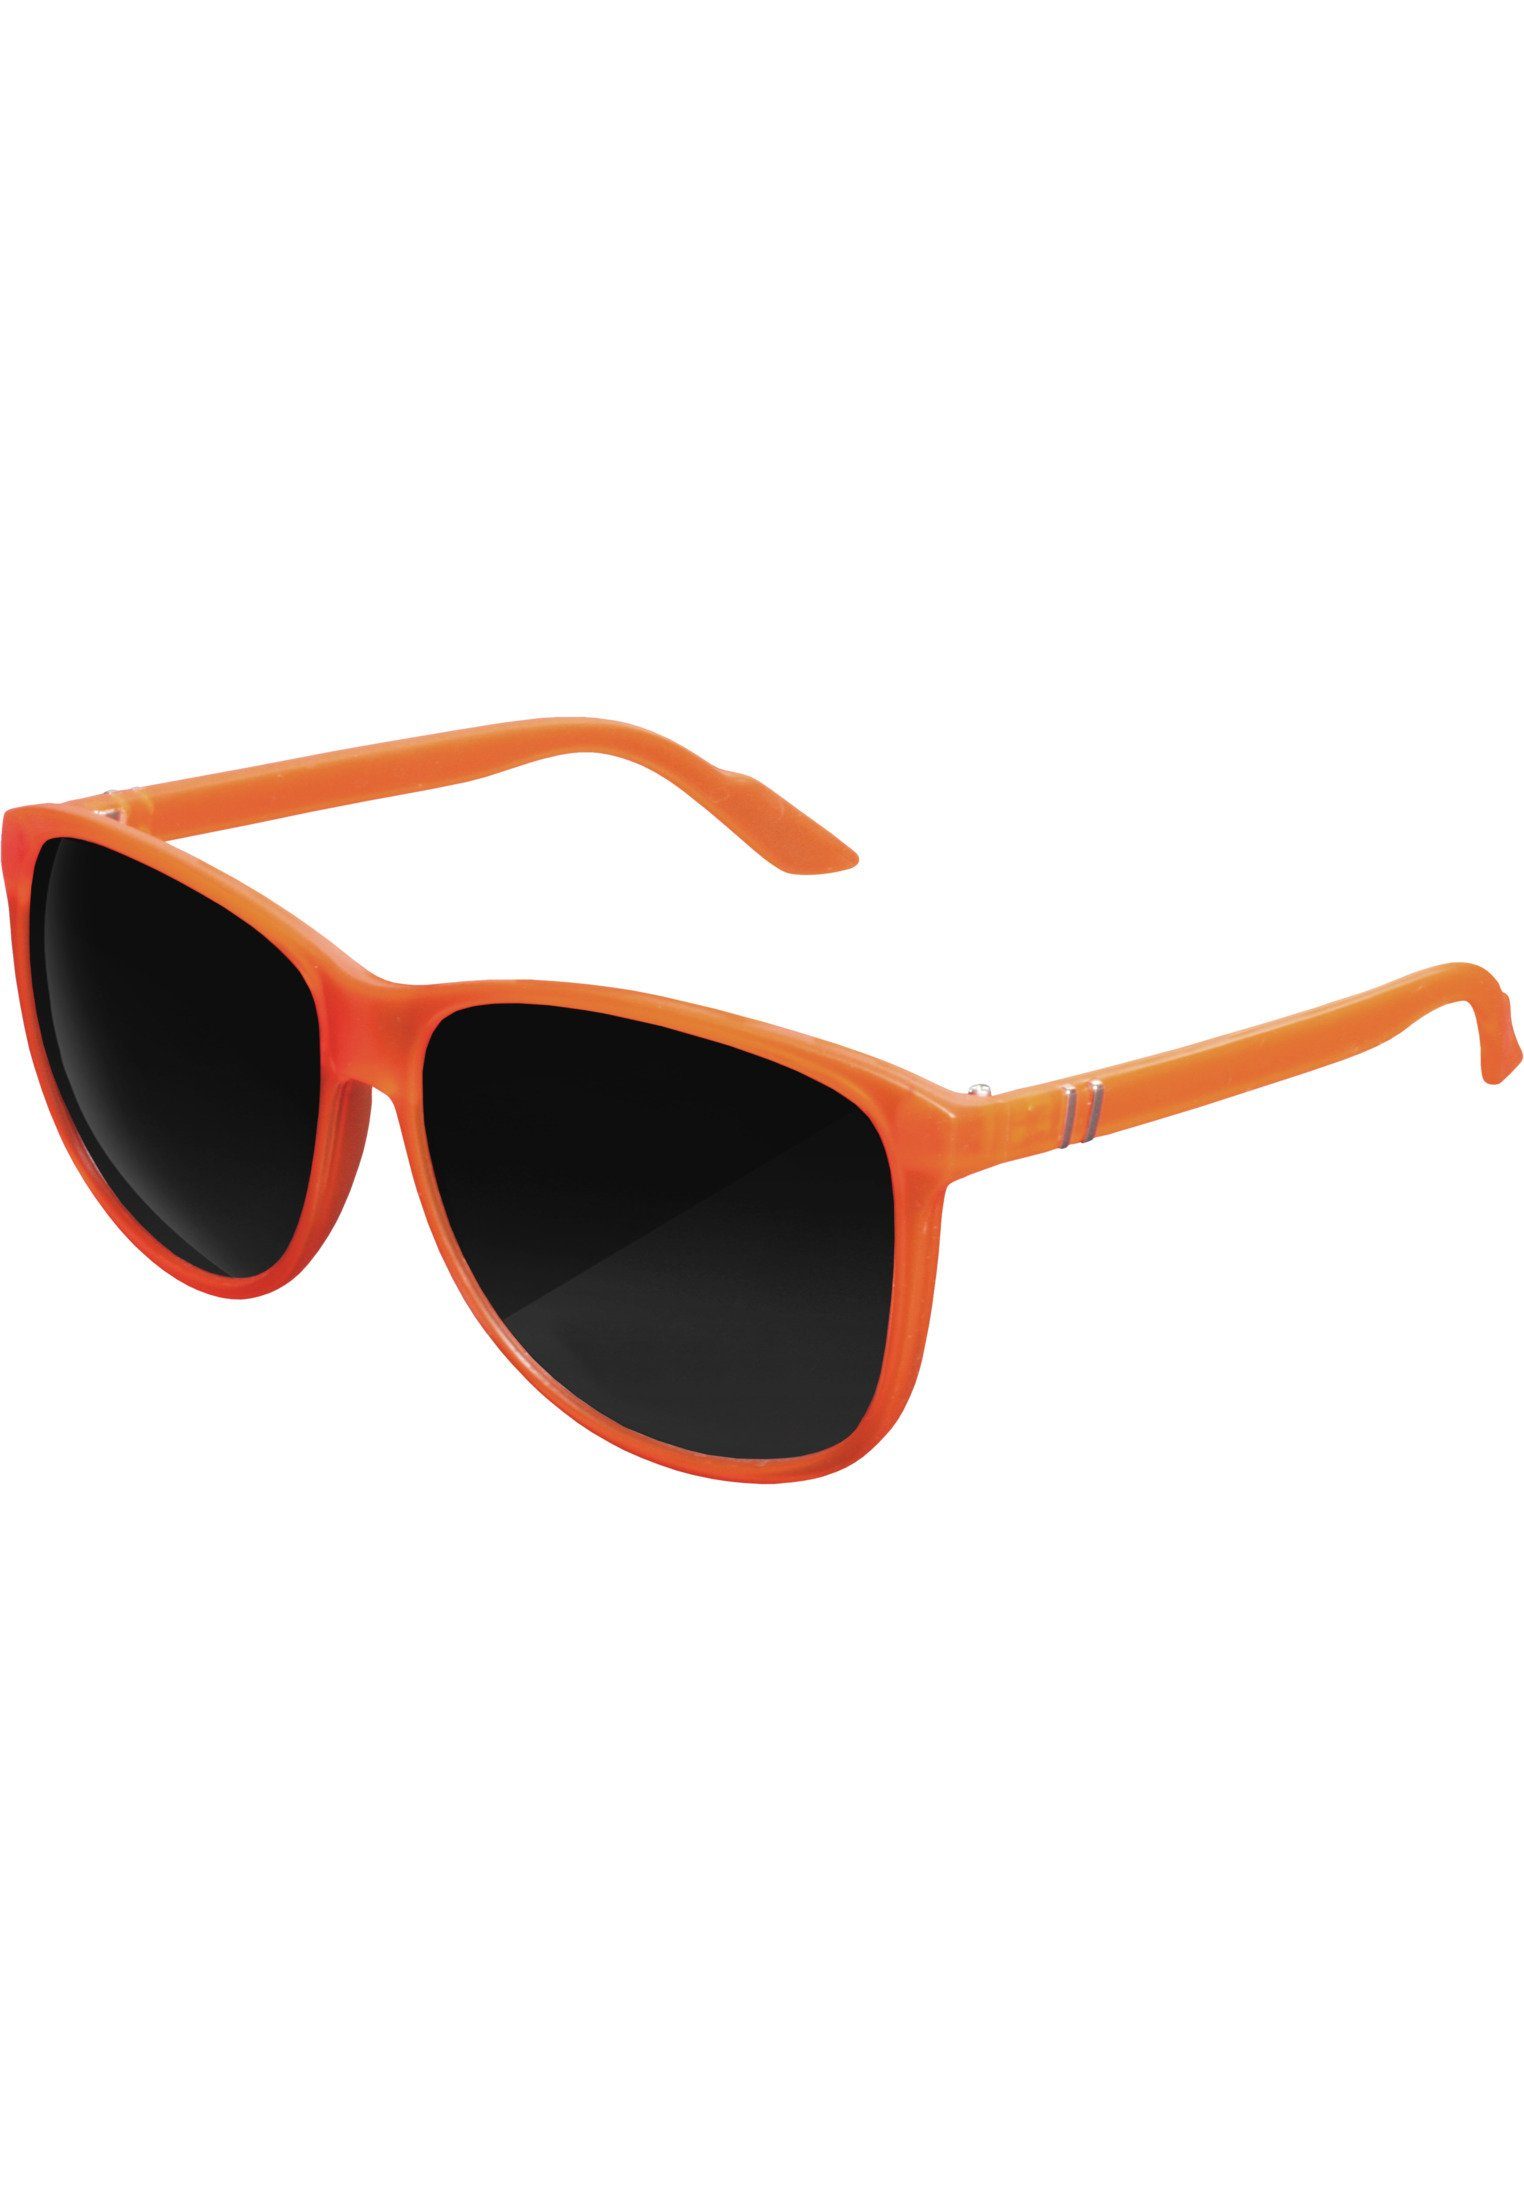 Sonnenbrille MSTRDS Accessoires Chirwa neonorange Sunglasses